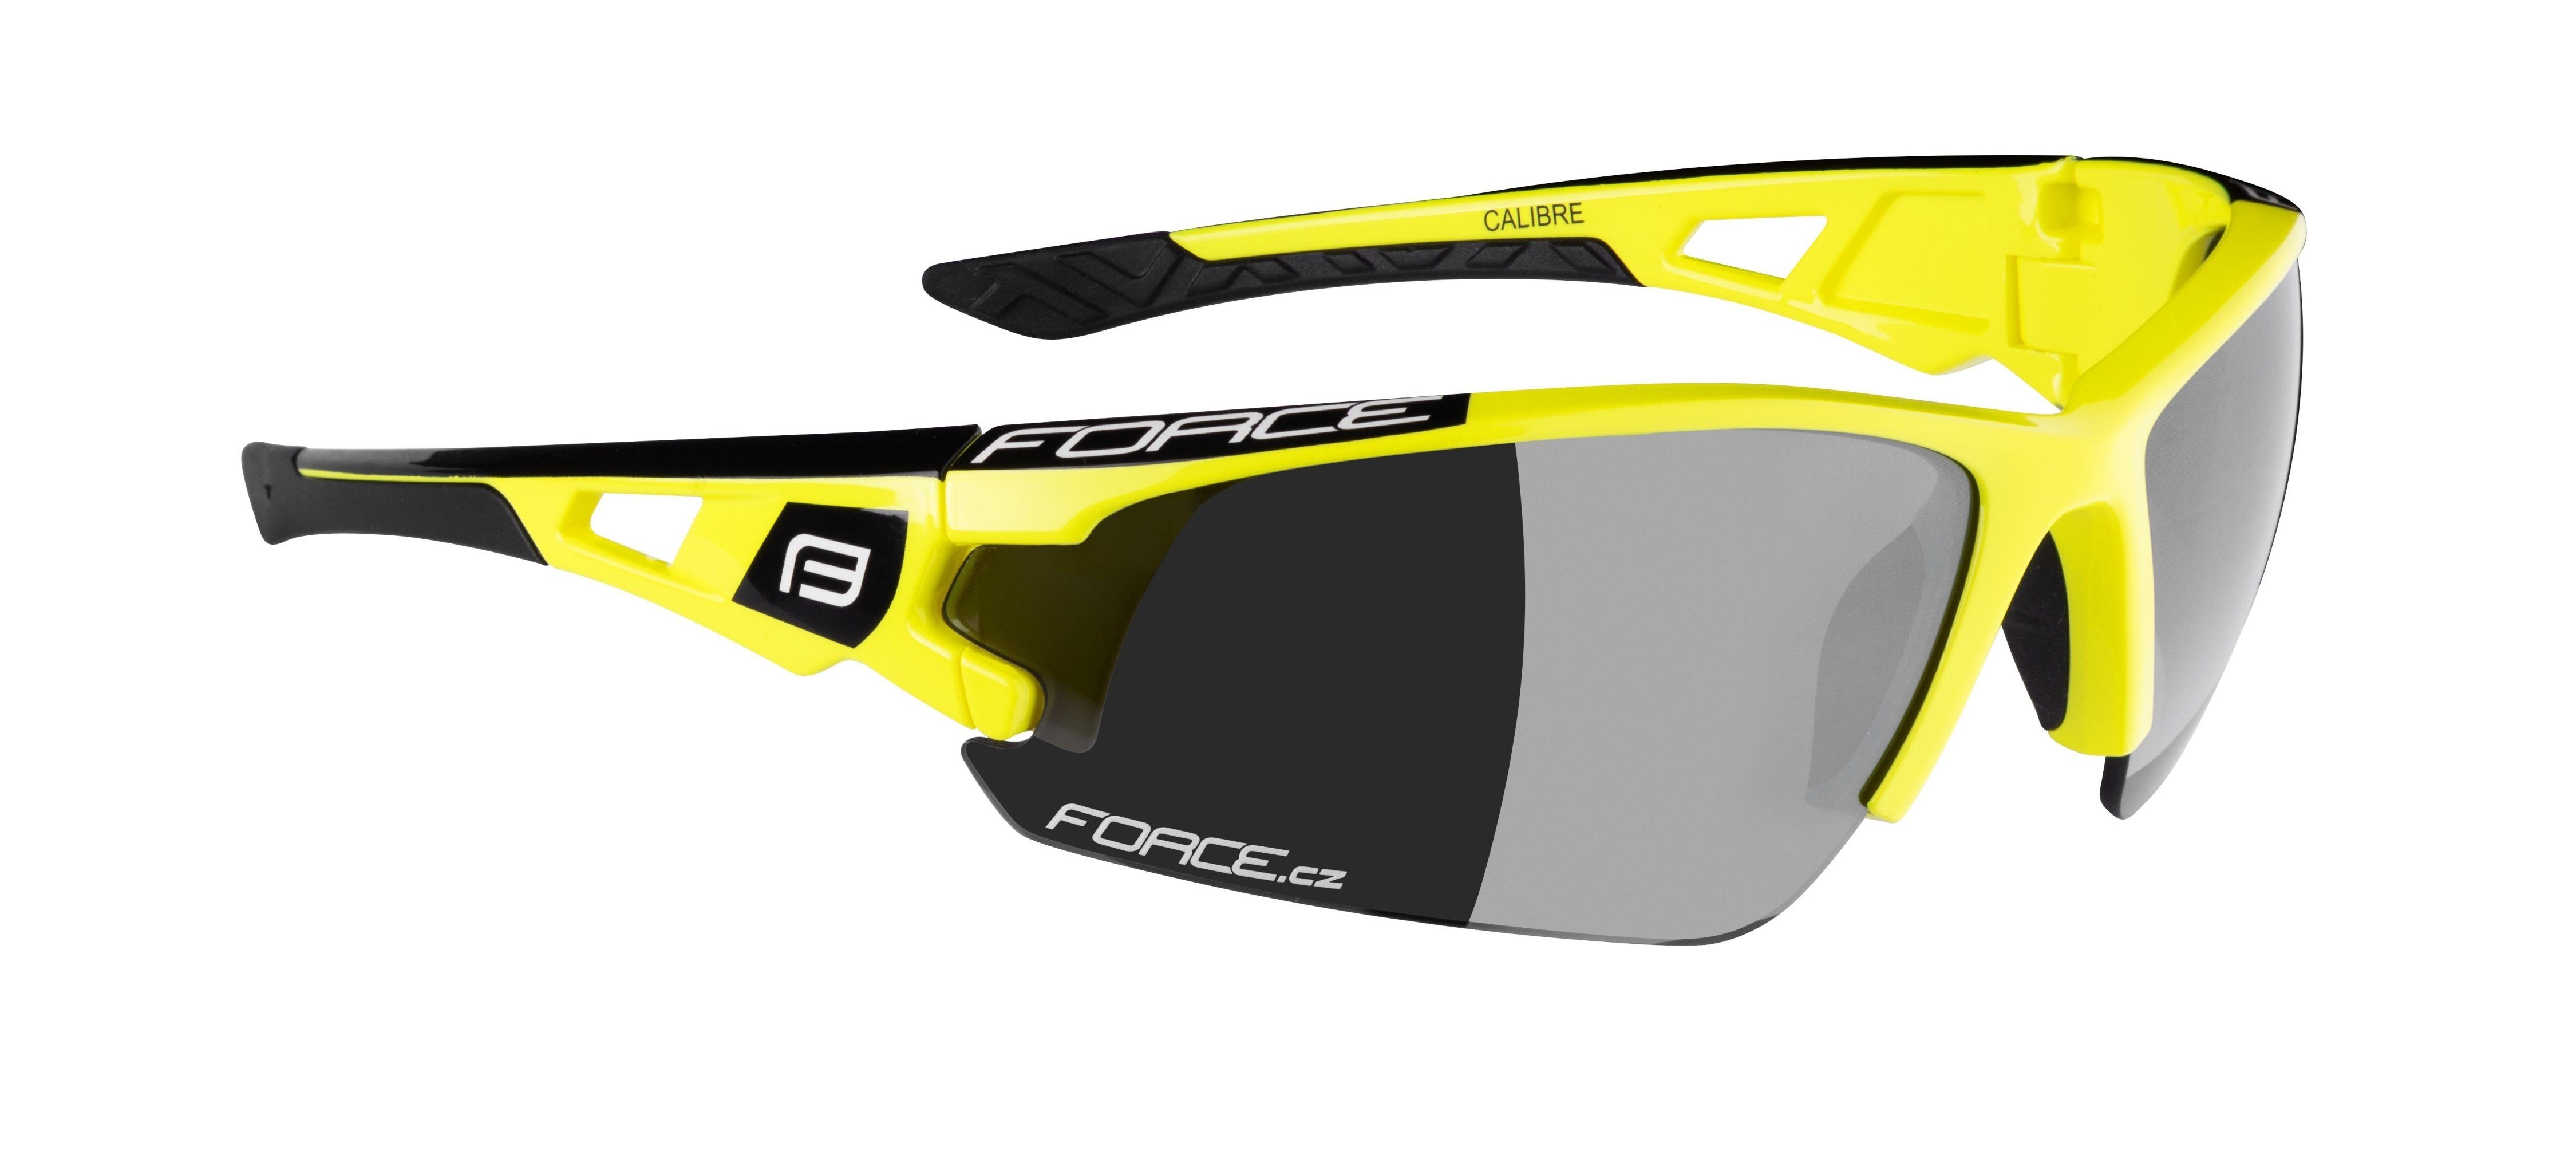 FORCE FORCE gelb-schwarz Sonnenbrille CALIBRE Fahrradbrille